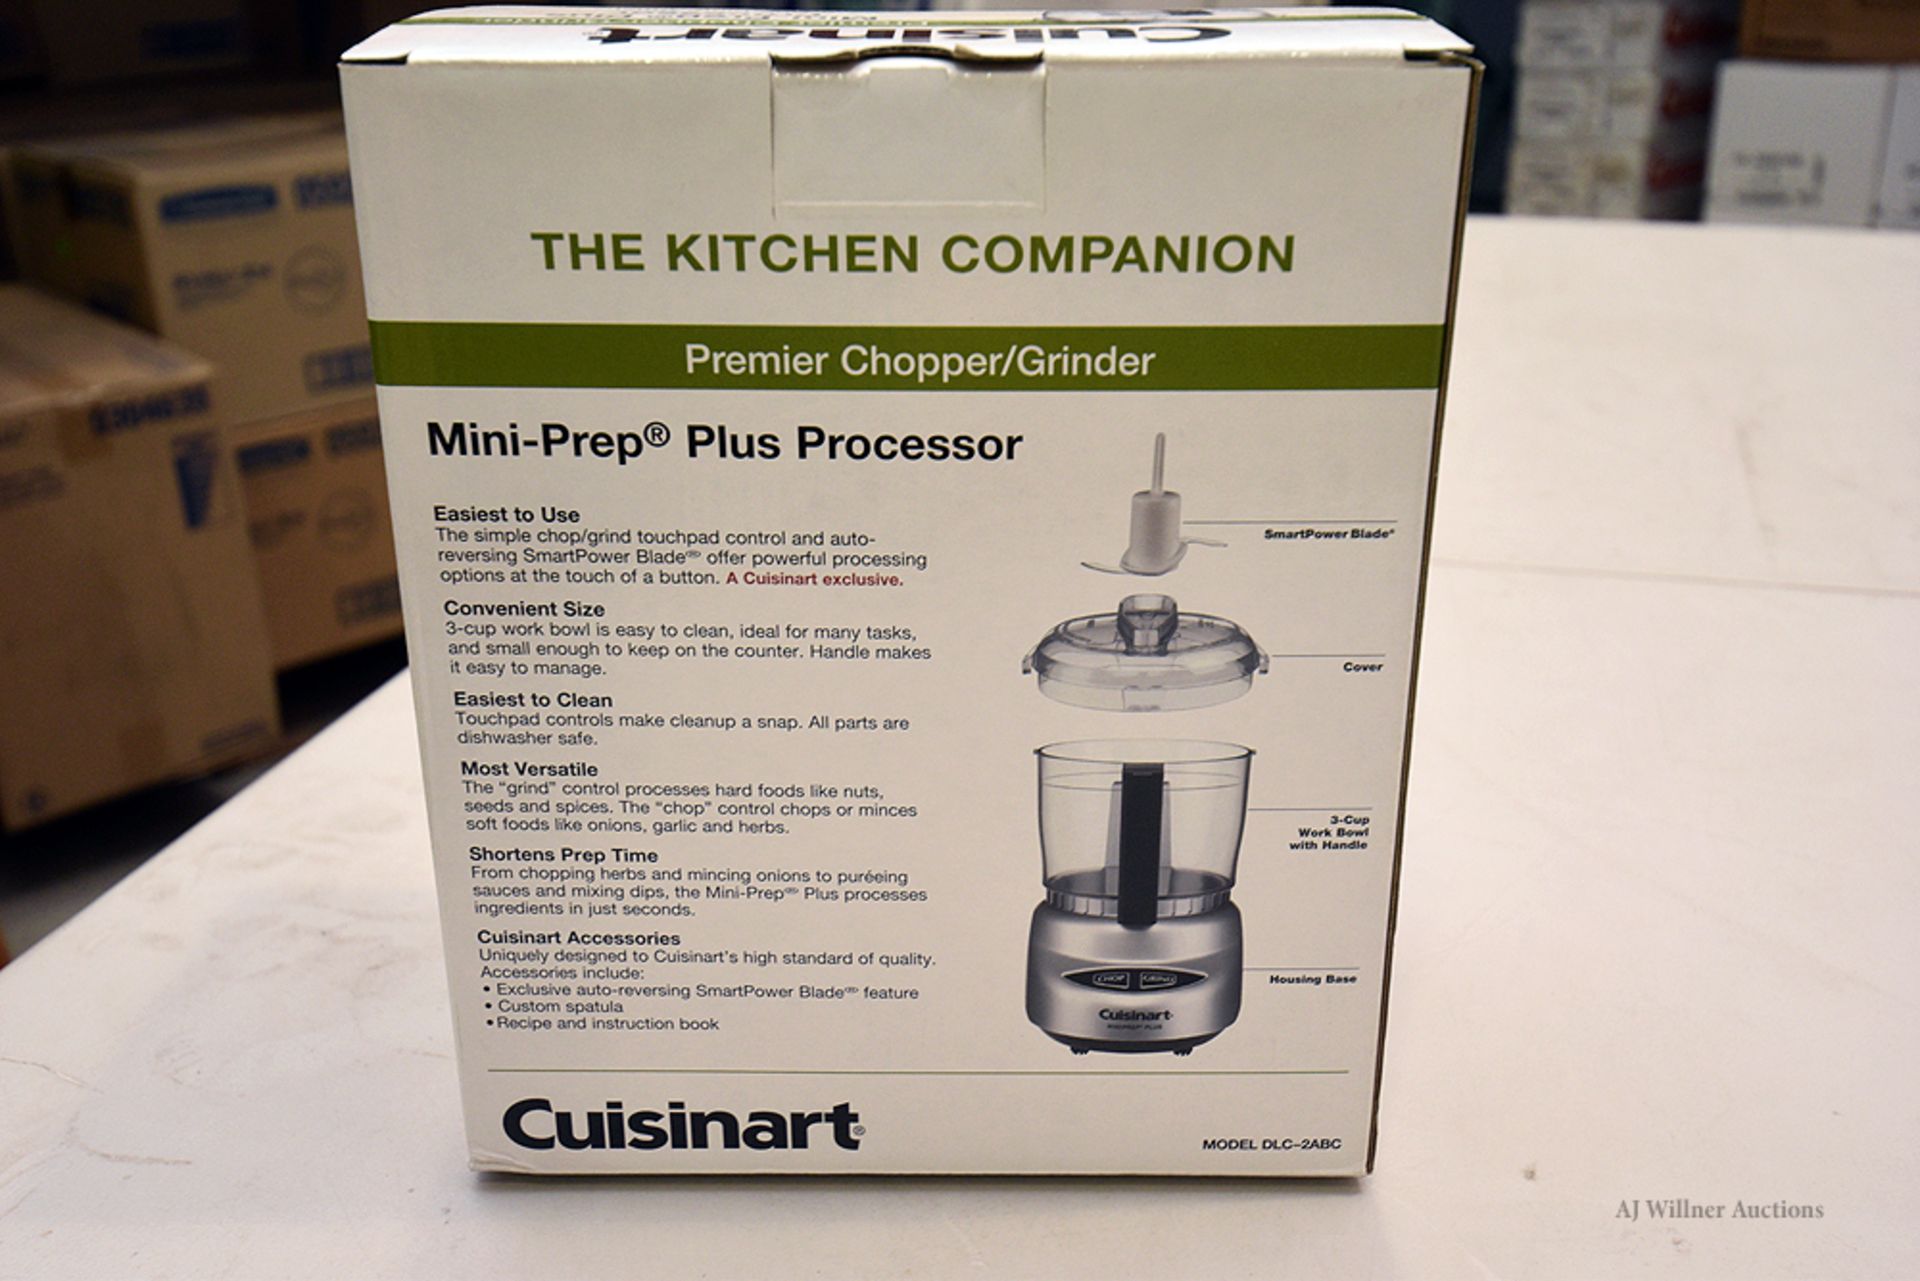 Cuisinart, "Mini-Prep Plus Processor", Model DLC-2ABC - Image 2 of 2